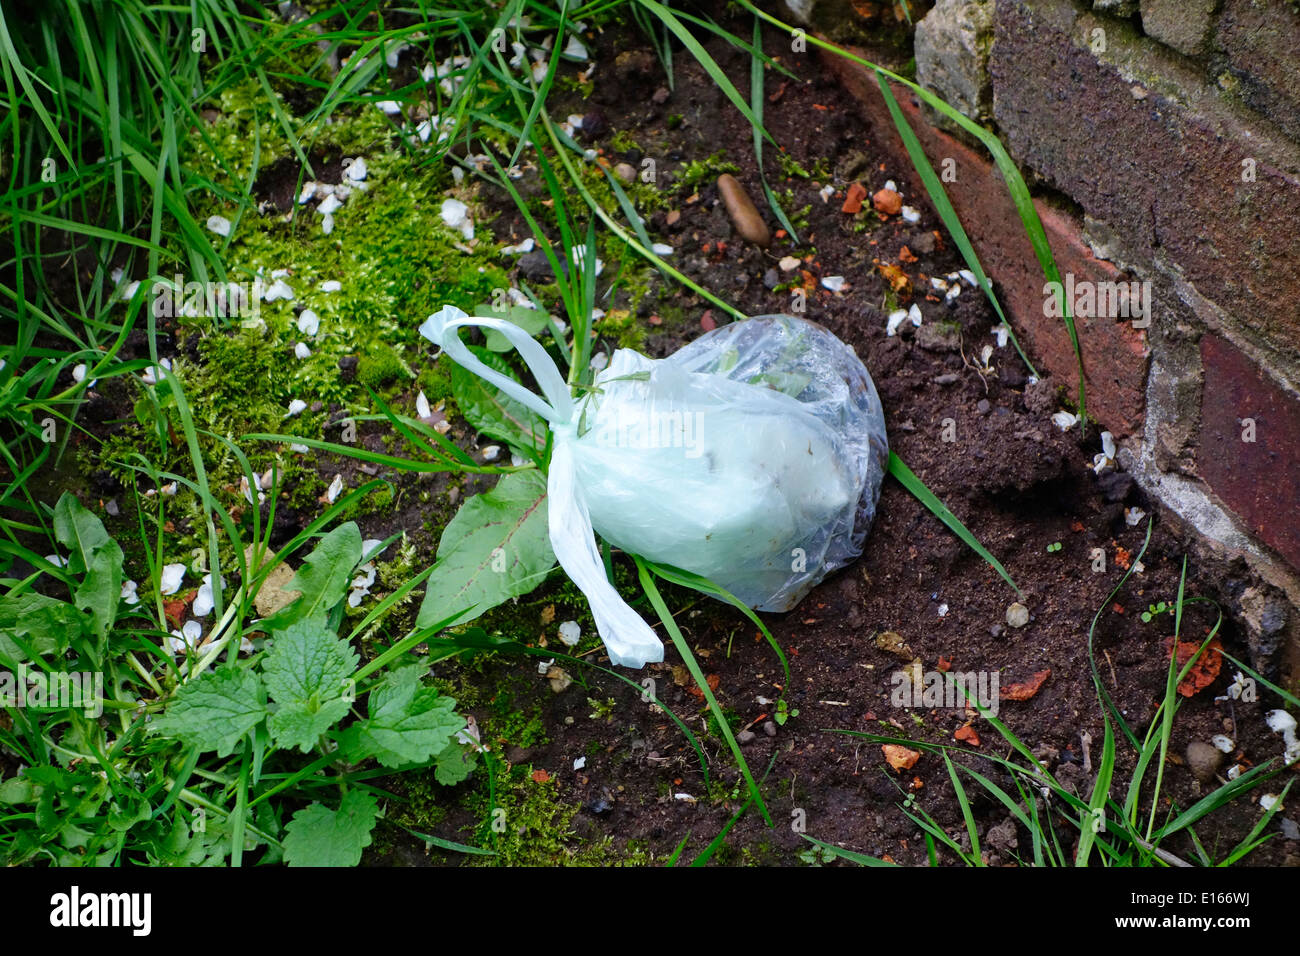 Discarded Plastic Bag of Dog Poo, UK Stock Photo